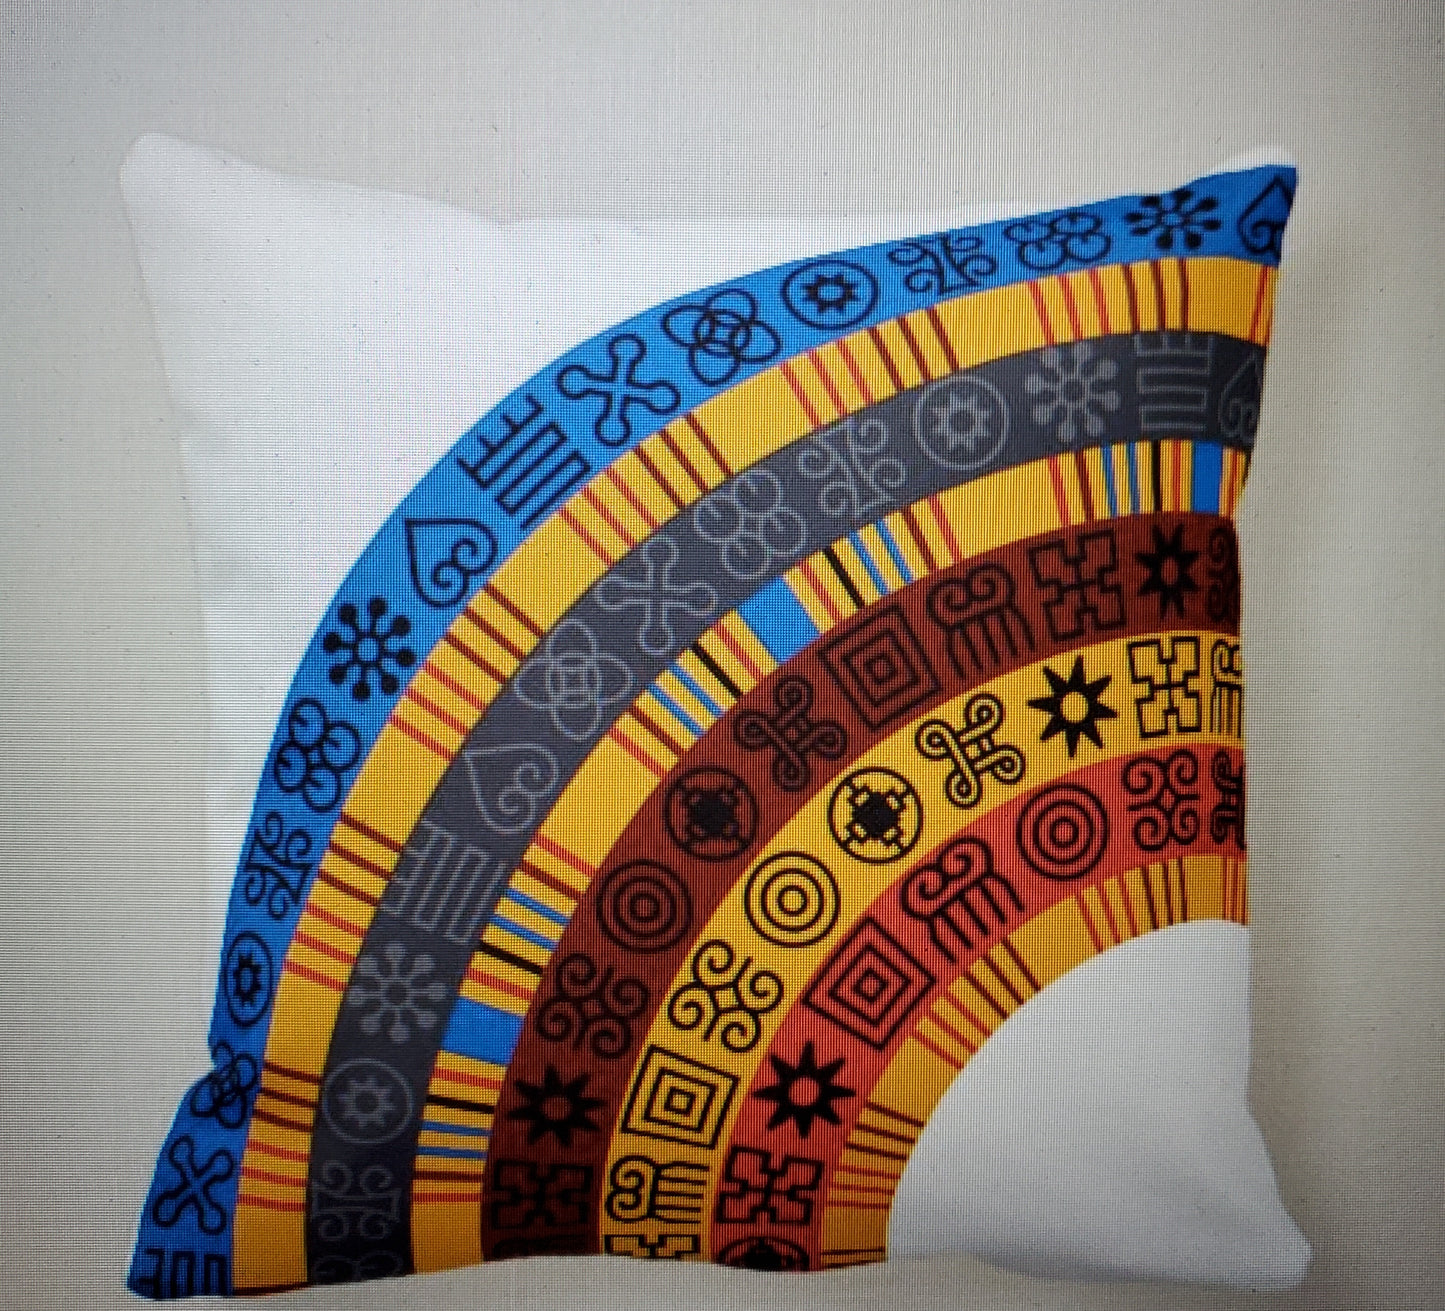 Pillow Talk - Custom Decor and Graphic Design Pillows